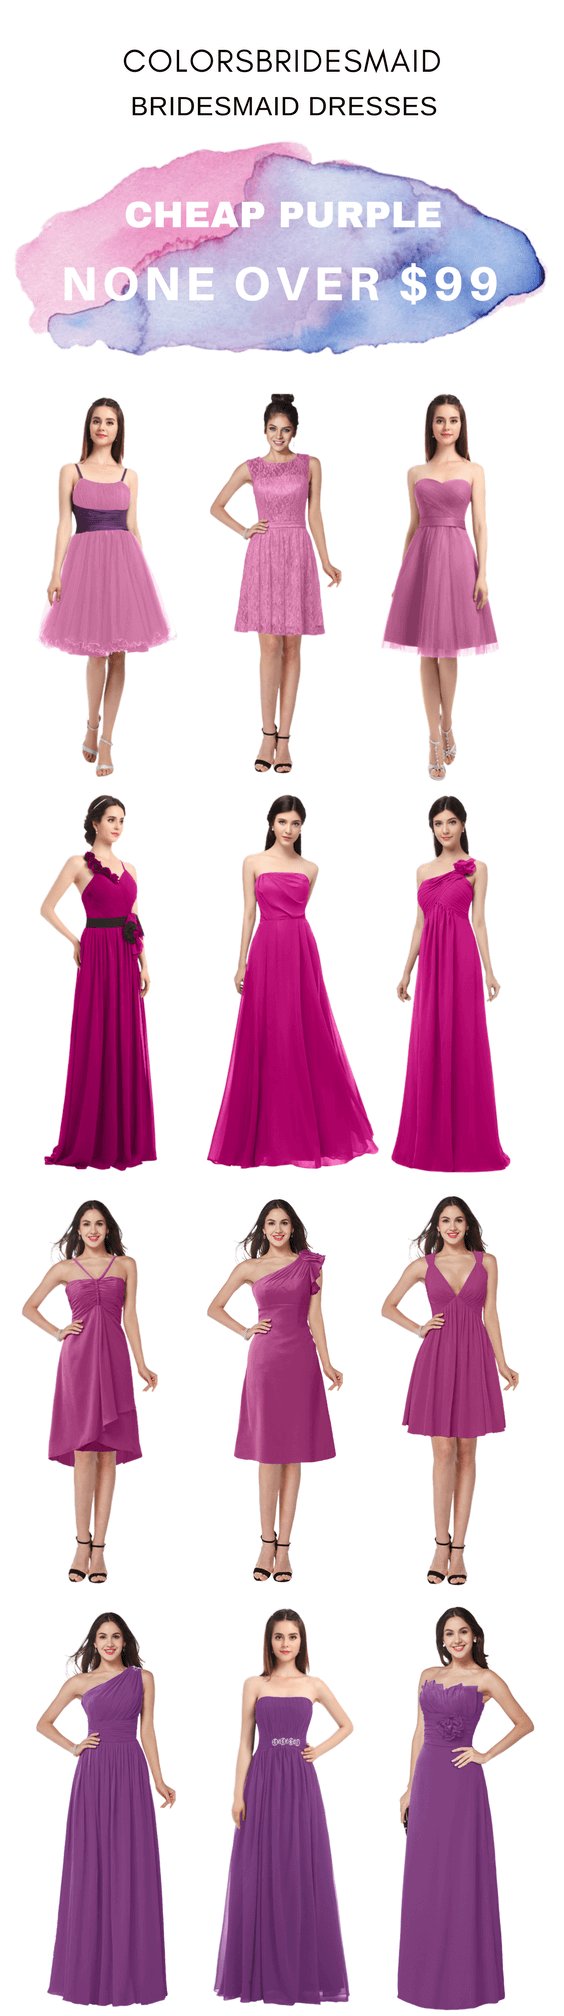 Cheap Purple Bridesmaid Dresses in Rosebloom, Hot Pink, Raspberry and Dahlia Colors